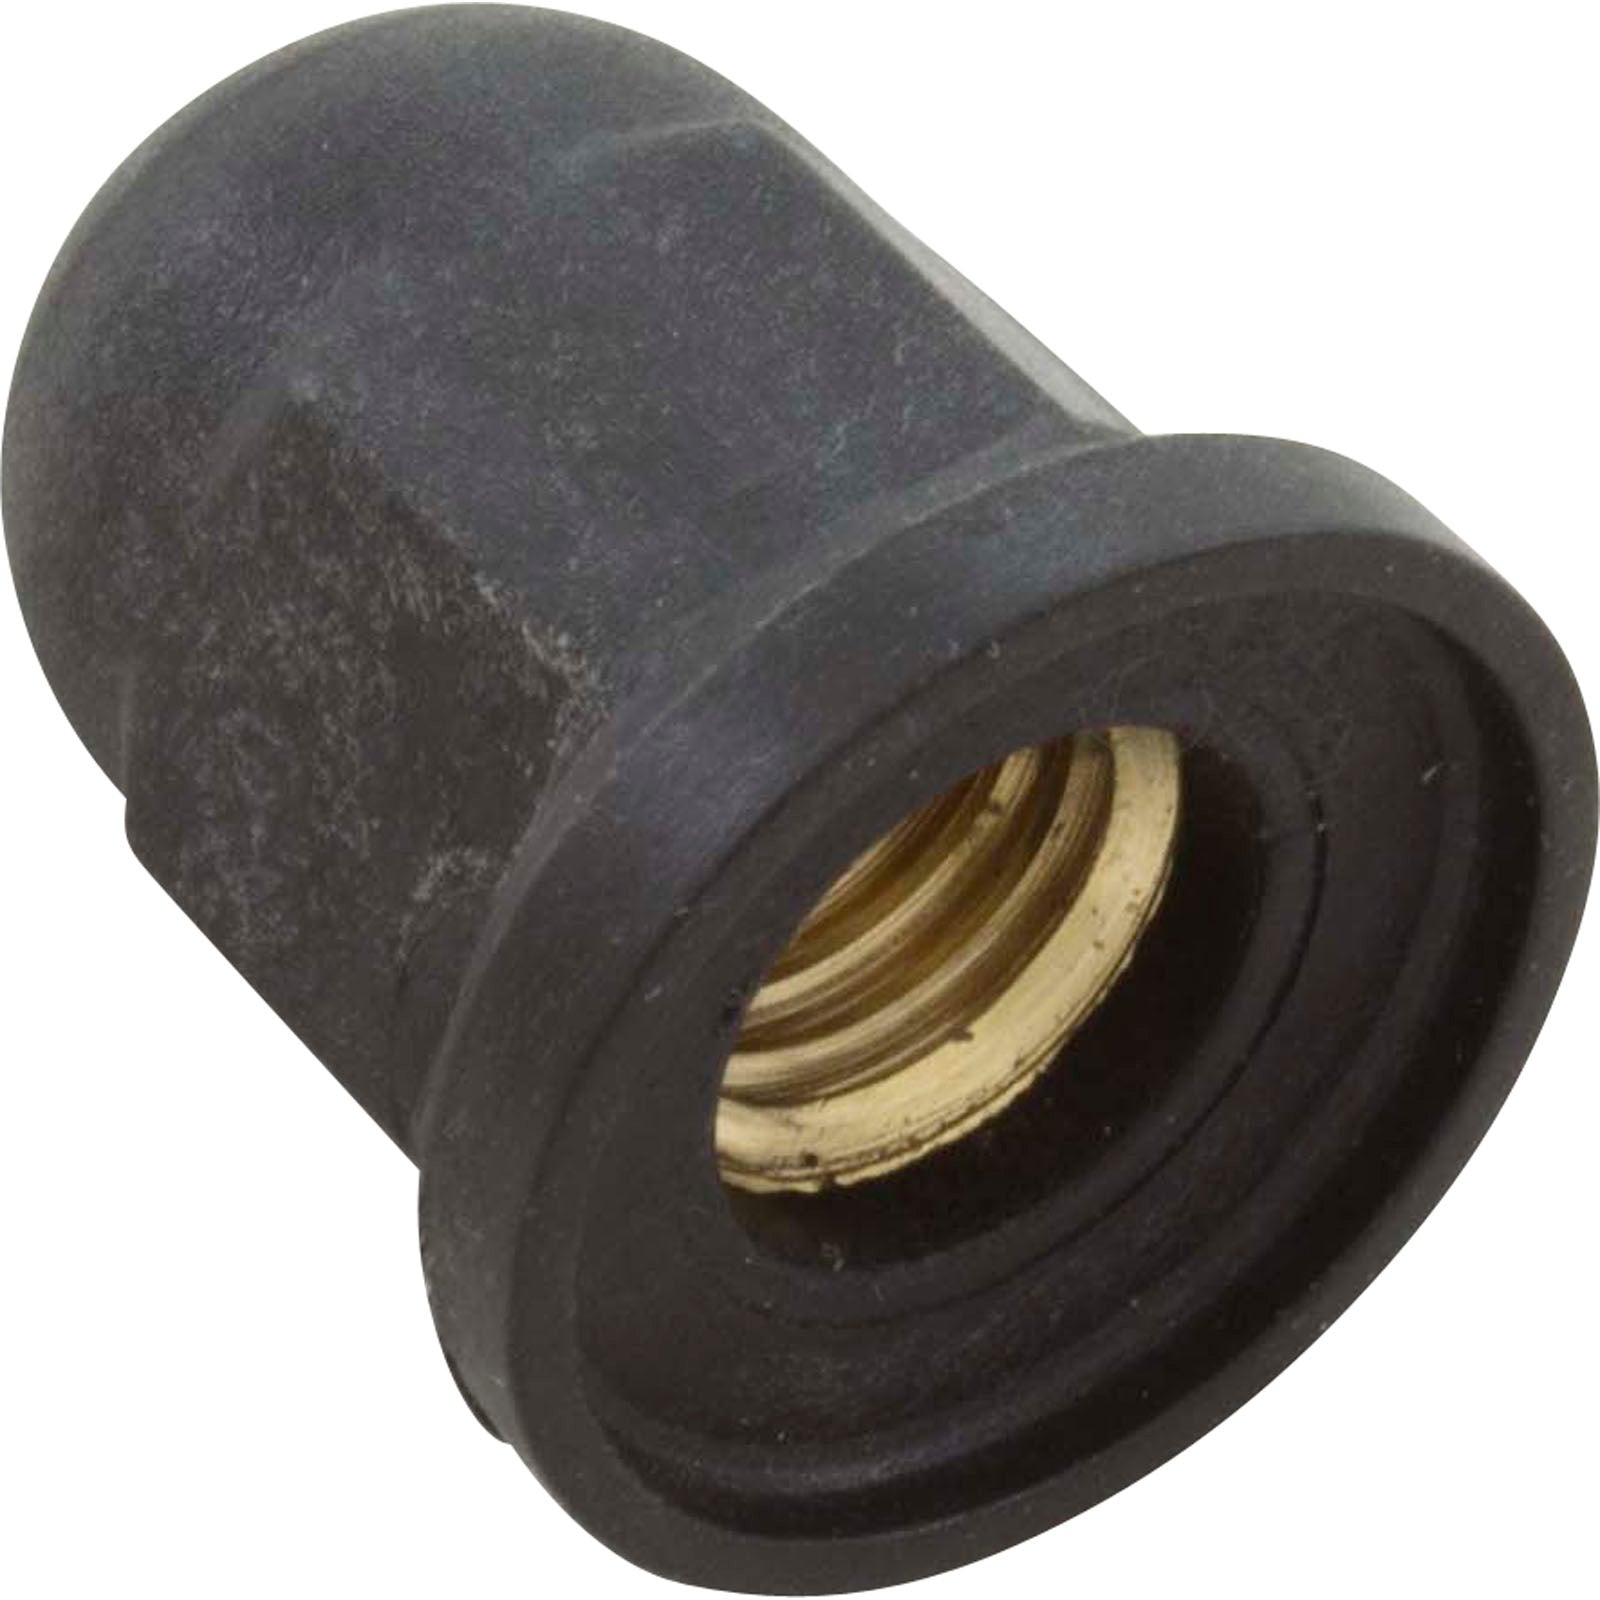 Nut, Speck 94/95/21-80, Impeller, Plastic with Brass Insert/2923592200